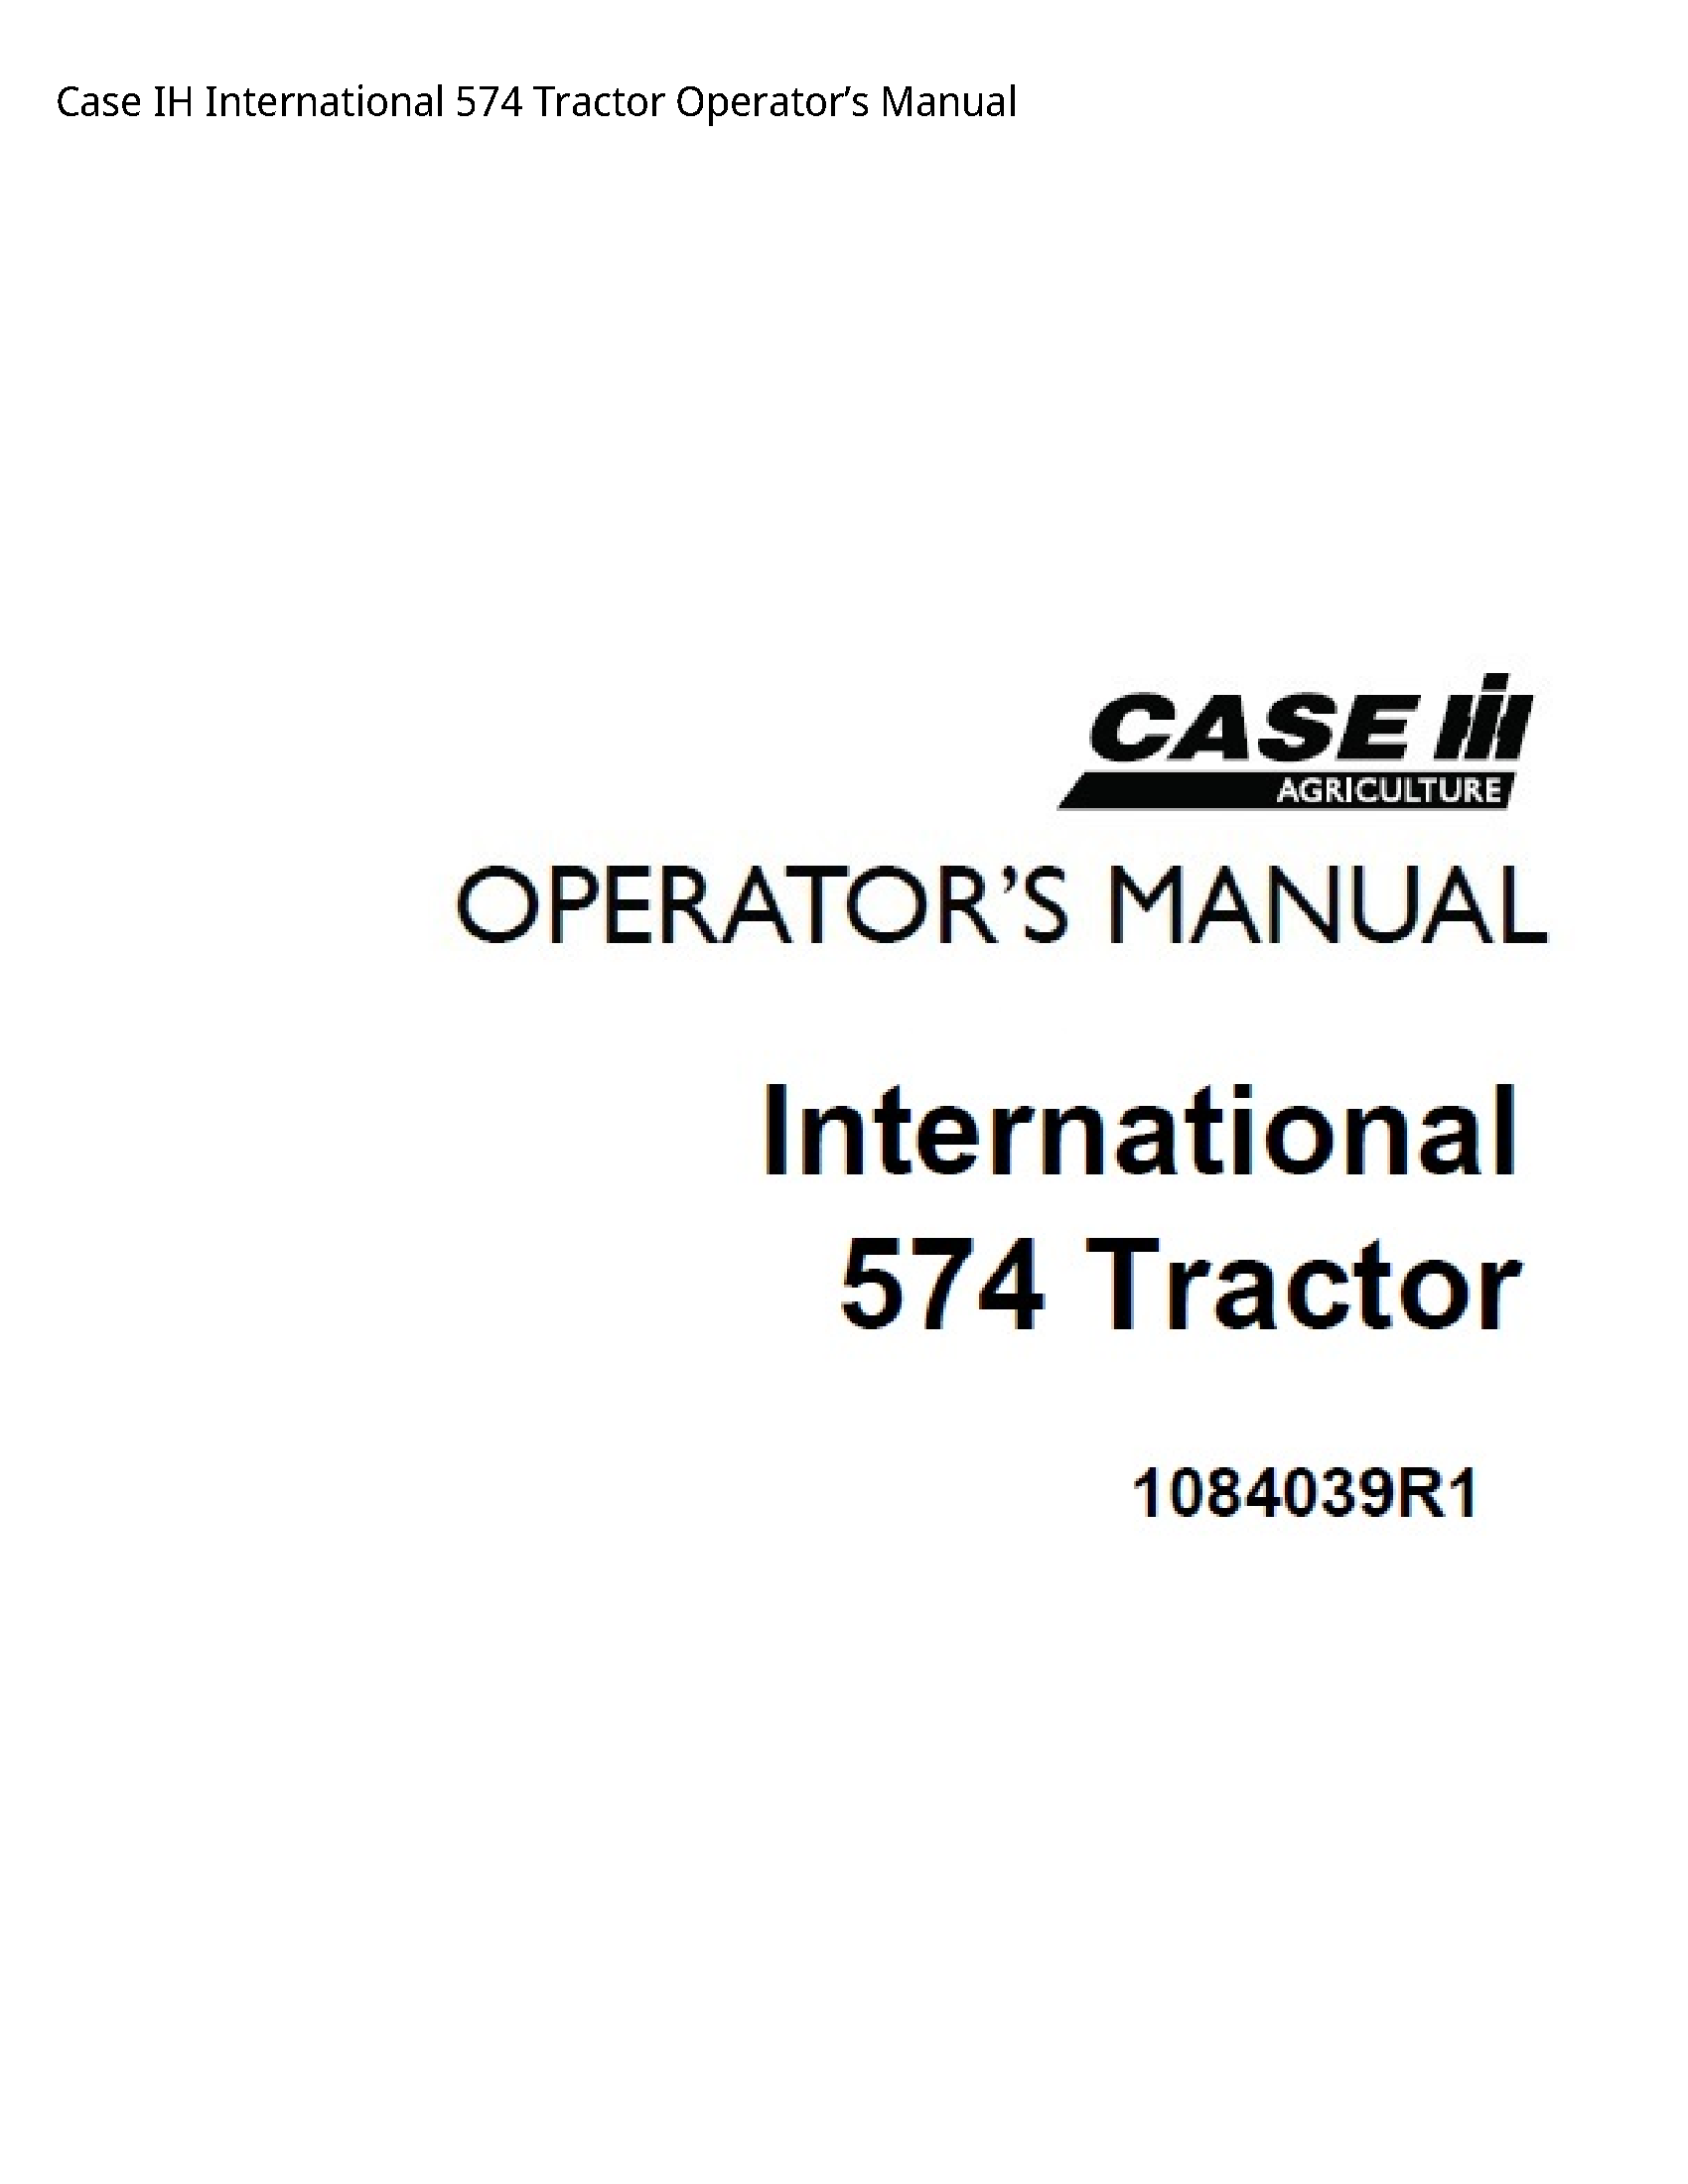 Case/Case IH 574 IH International Tractor Operator’s manual